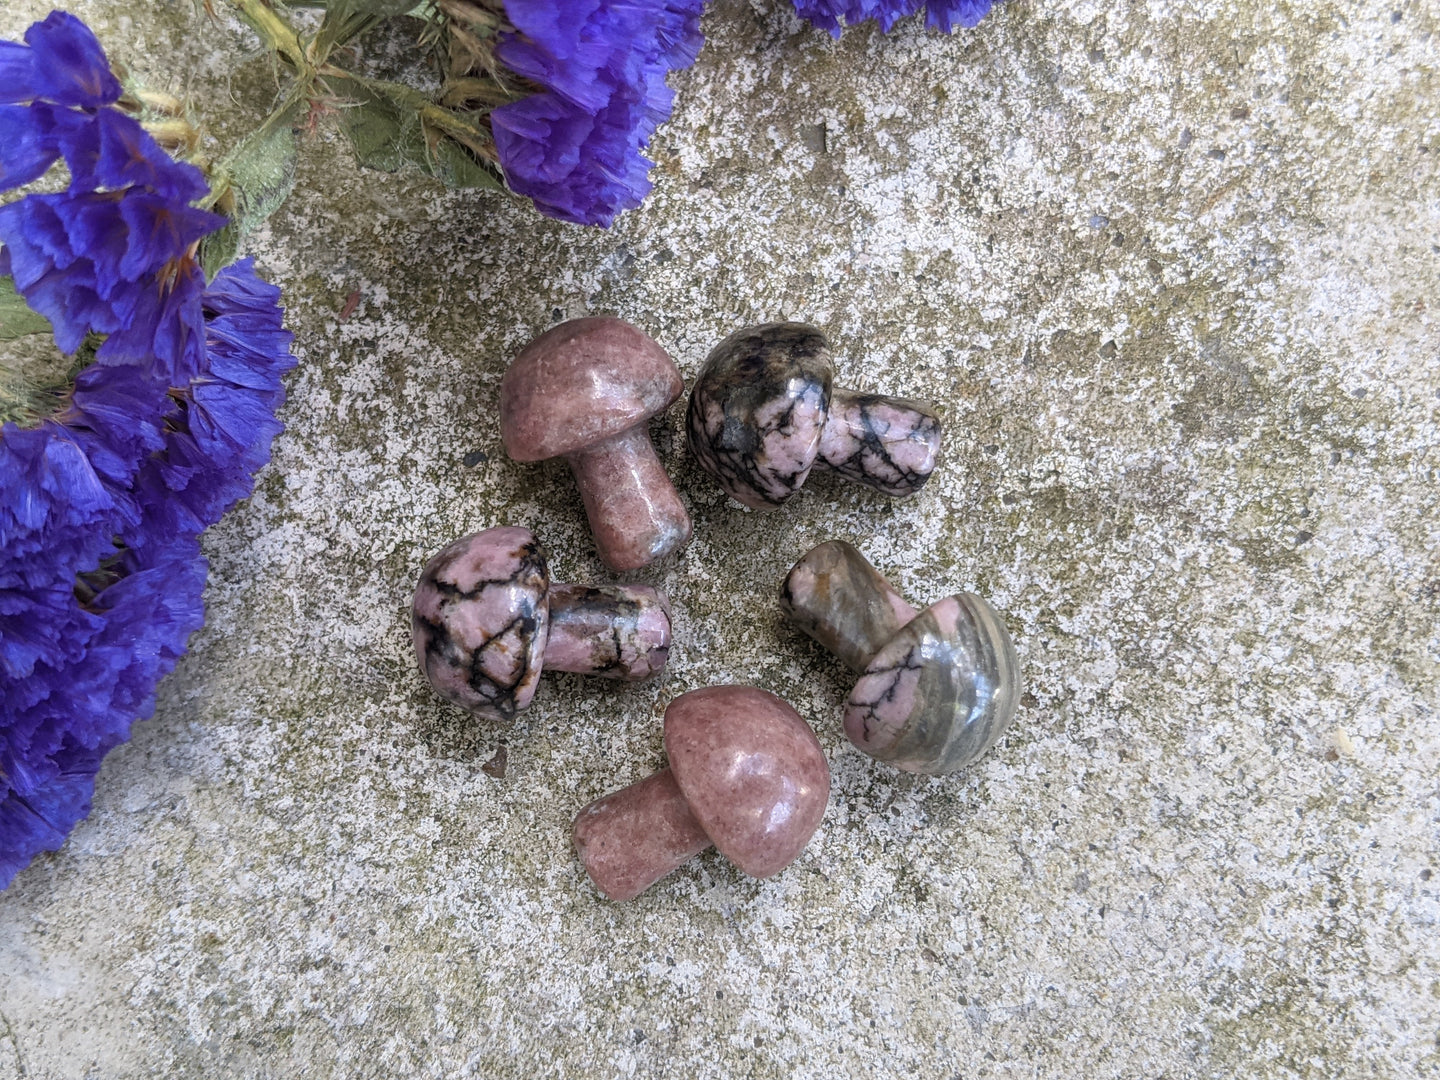 Rhodonite Mini Mushrooms